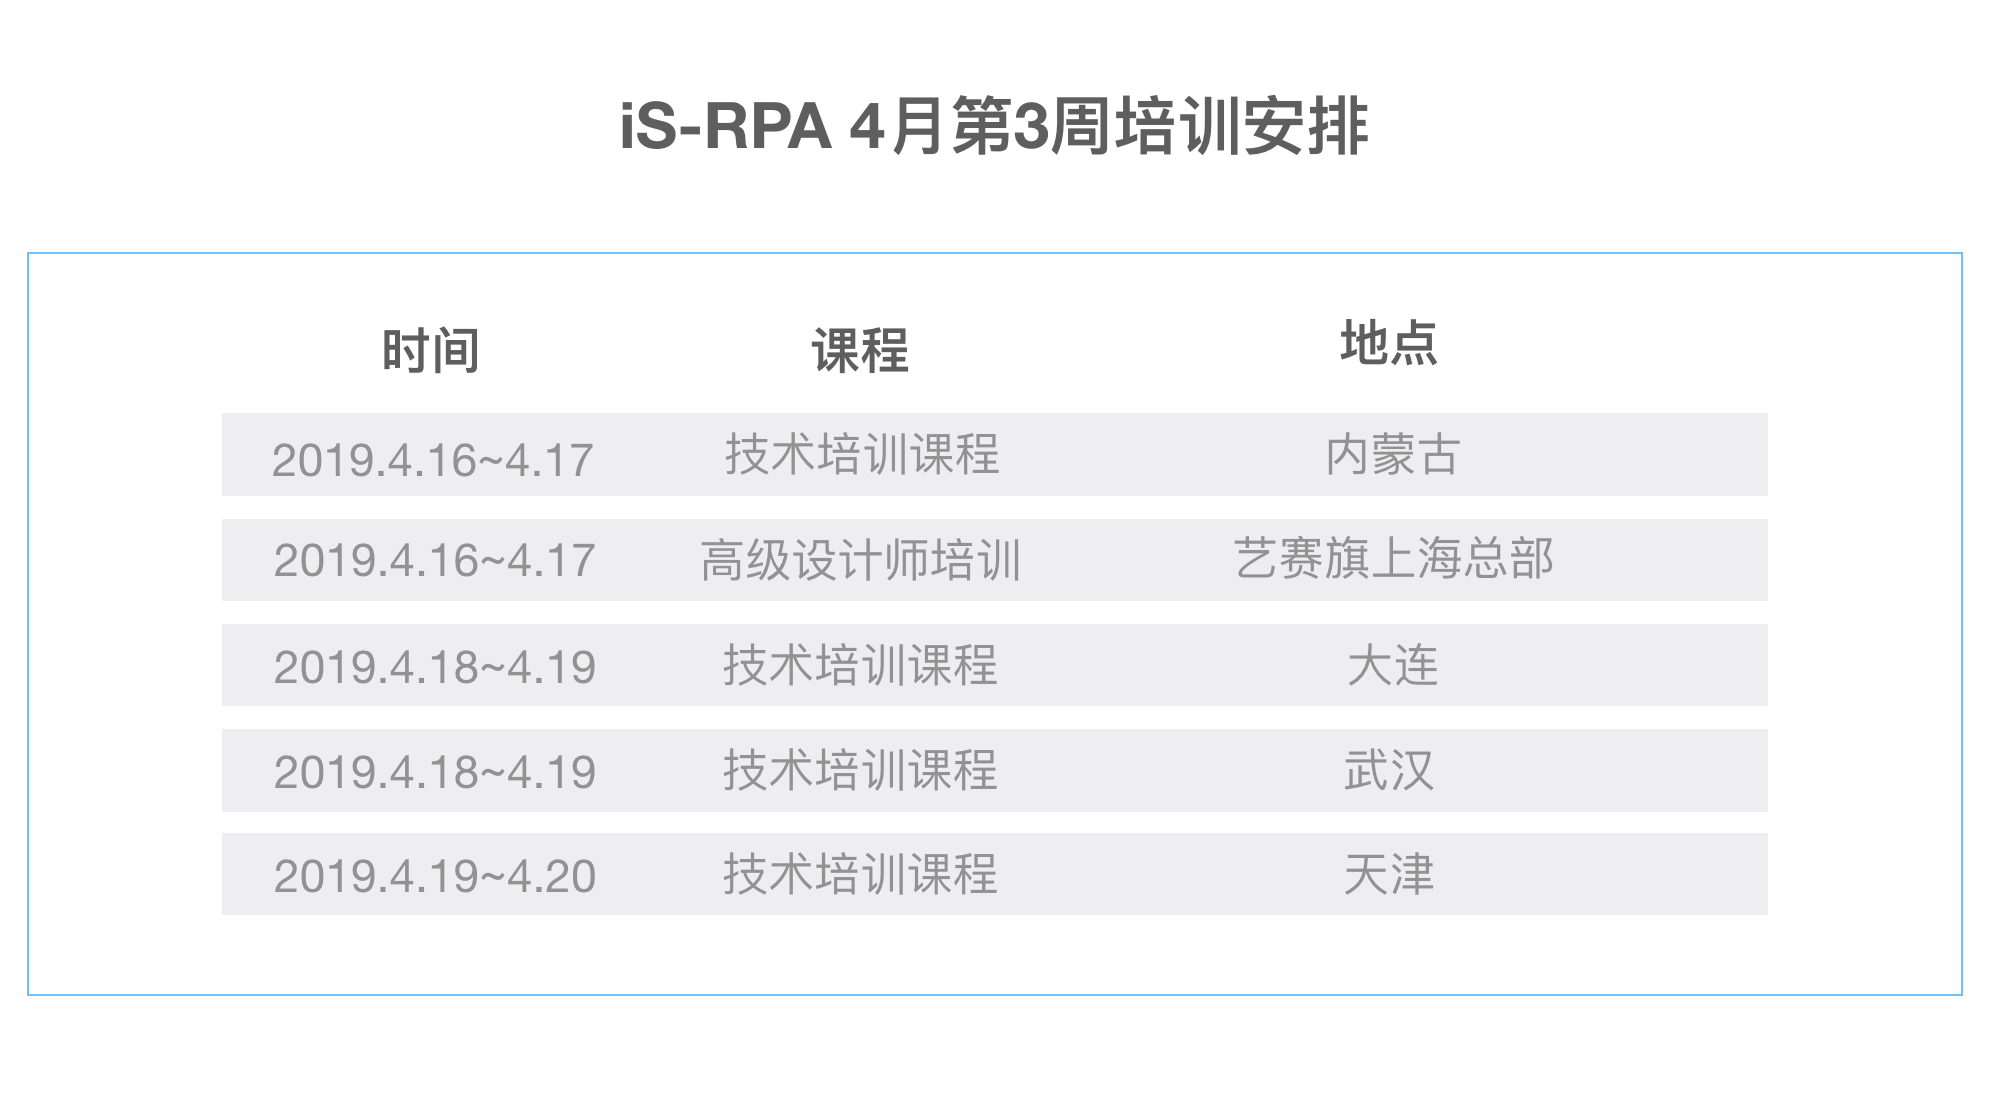 iS-RPA 学院 4 月第 3 周（04/15-04/21）培训安排